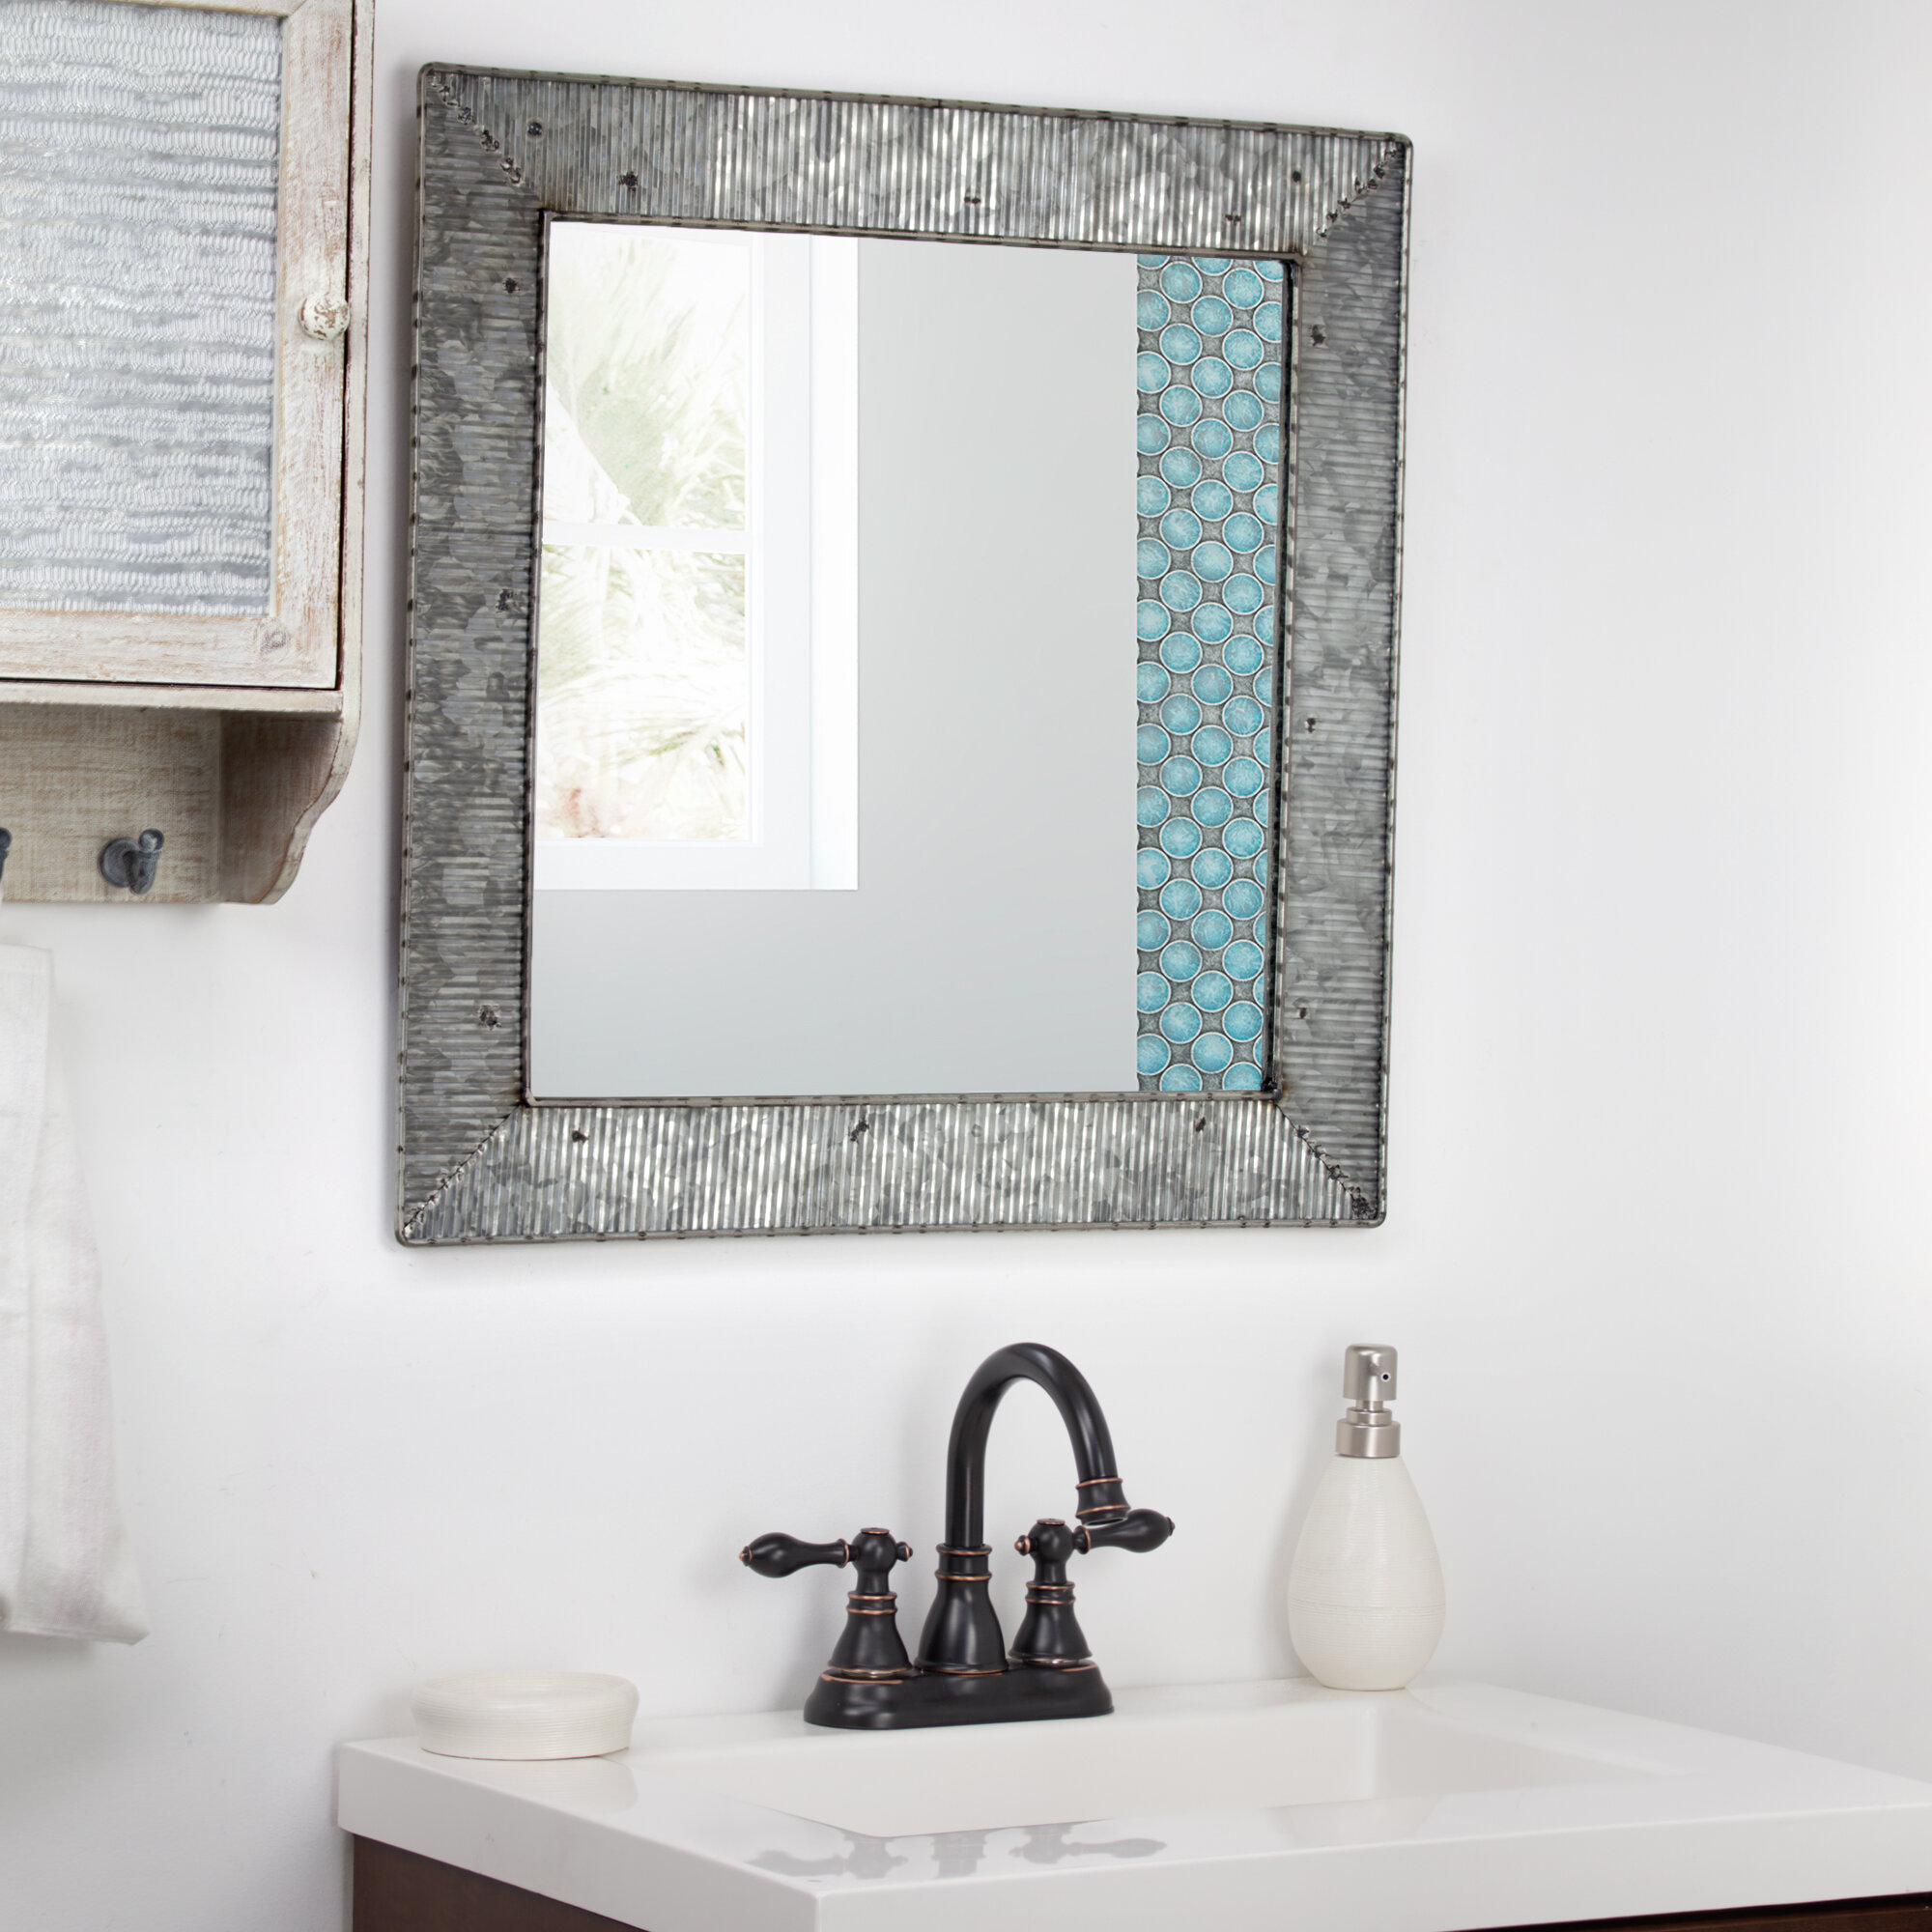 Williston Forge Baur Galvanized Industrial Beveled Bathroom Vanity Mirror Reviews Wayfair Ca